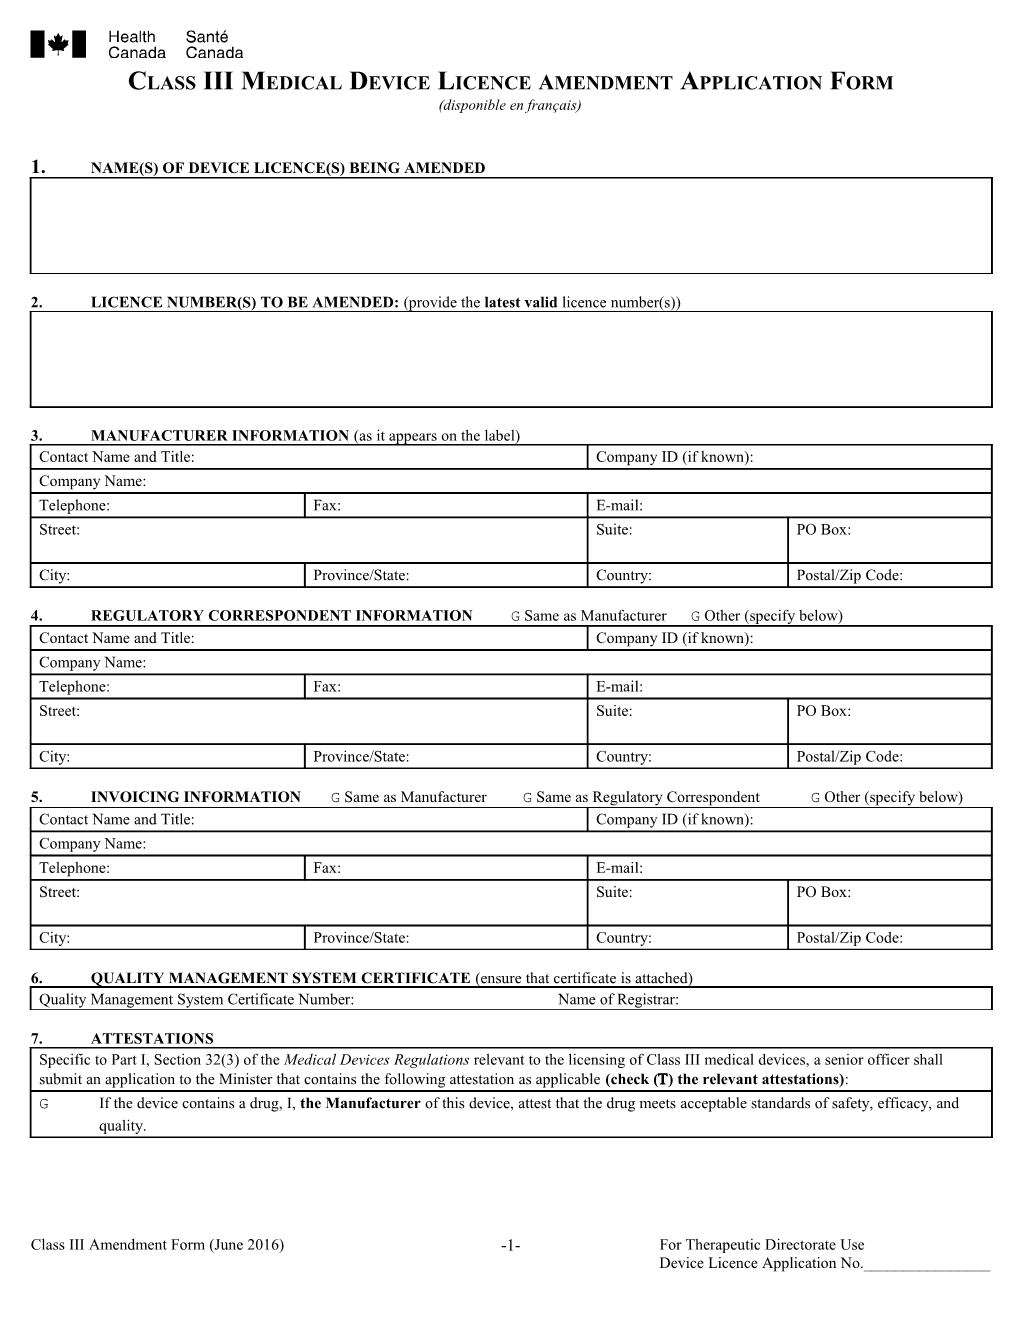 Class III Medical Device Licence Amendment Application Form